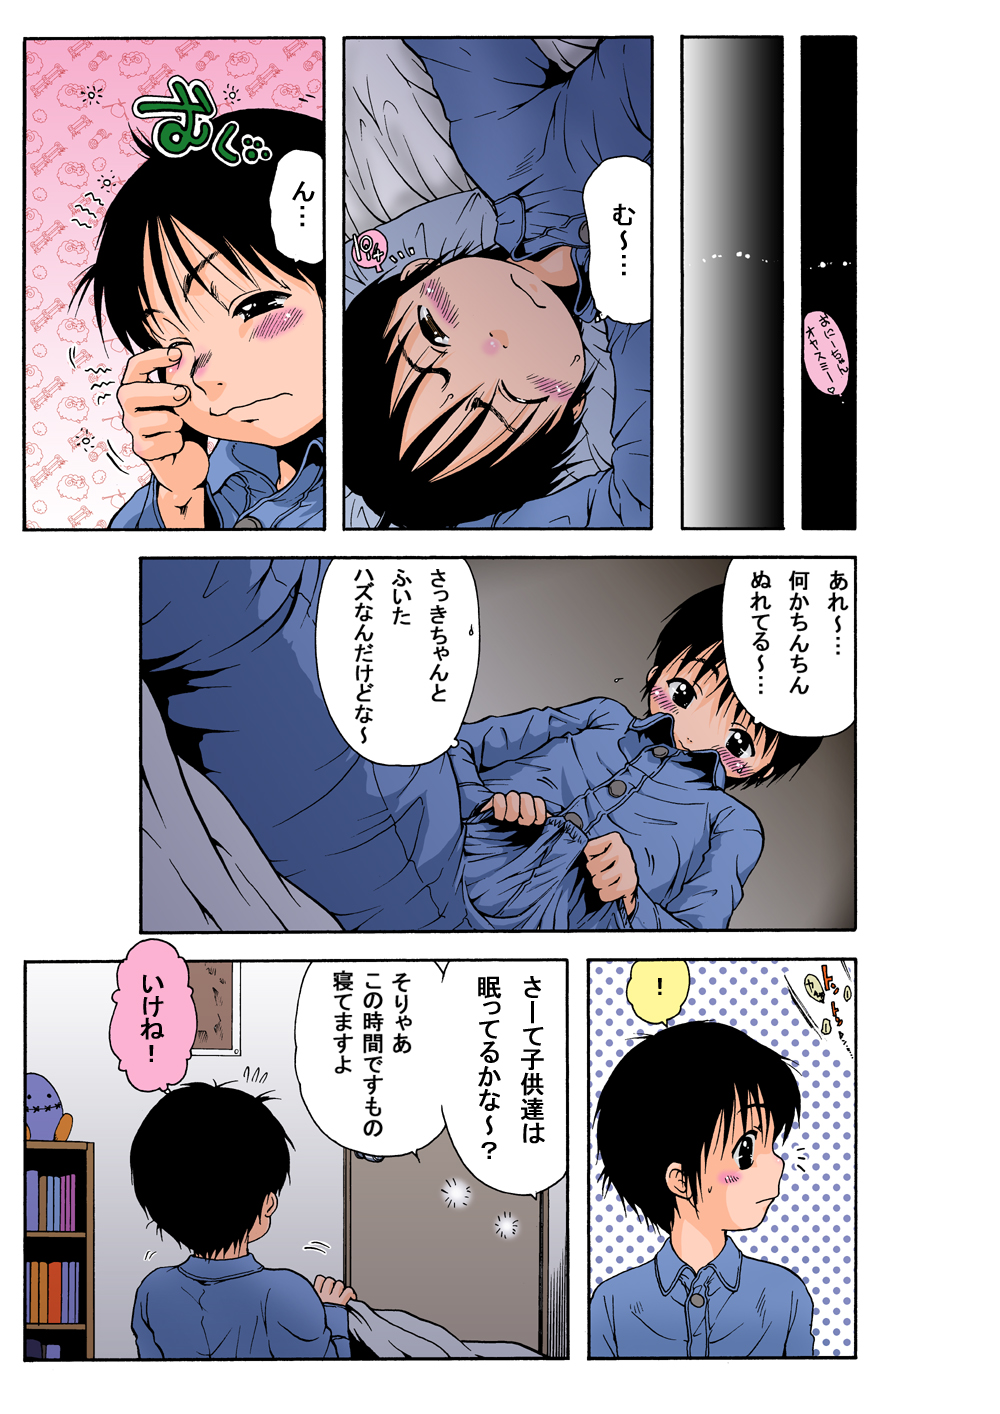 Read Yokochin Teikoku Ohnuma Hiroshi Chinmari Catch Ball Hentai Porns Manga And